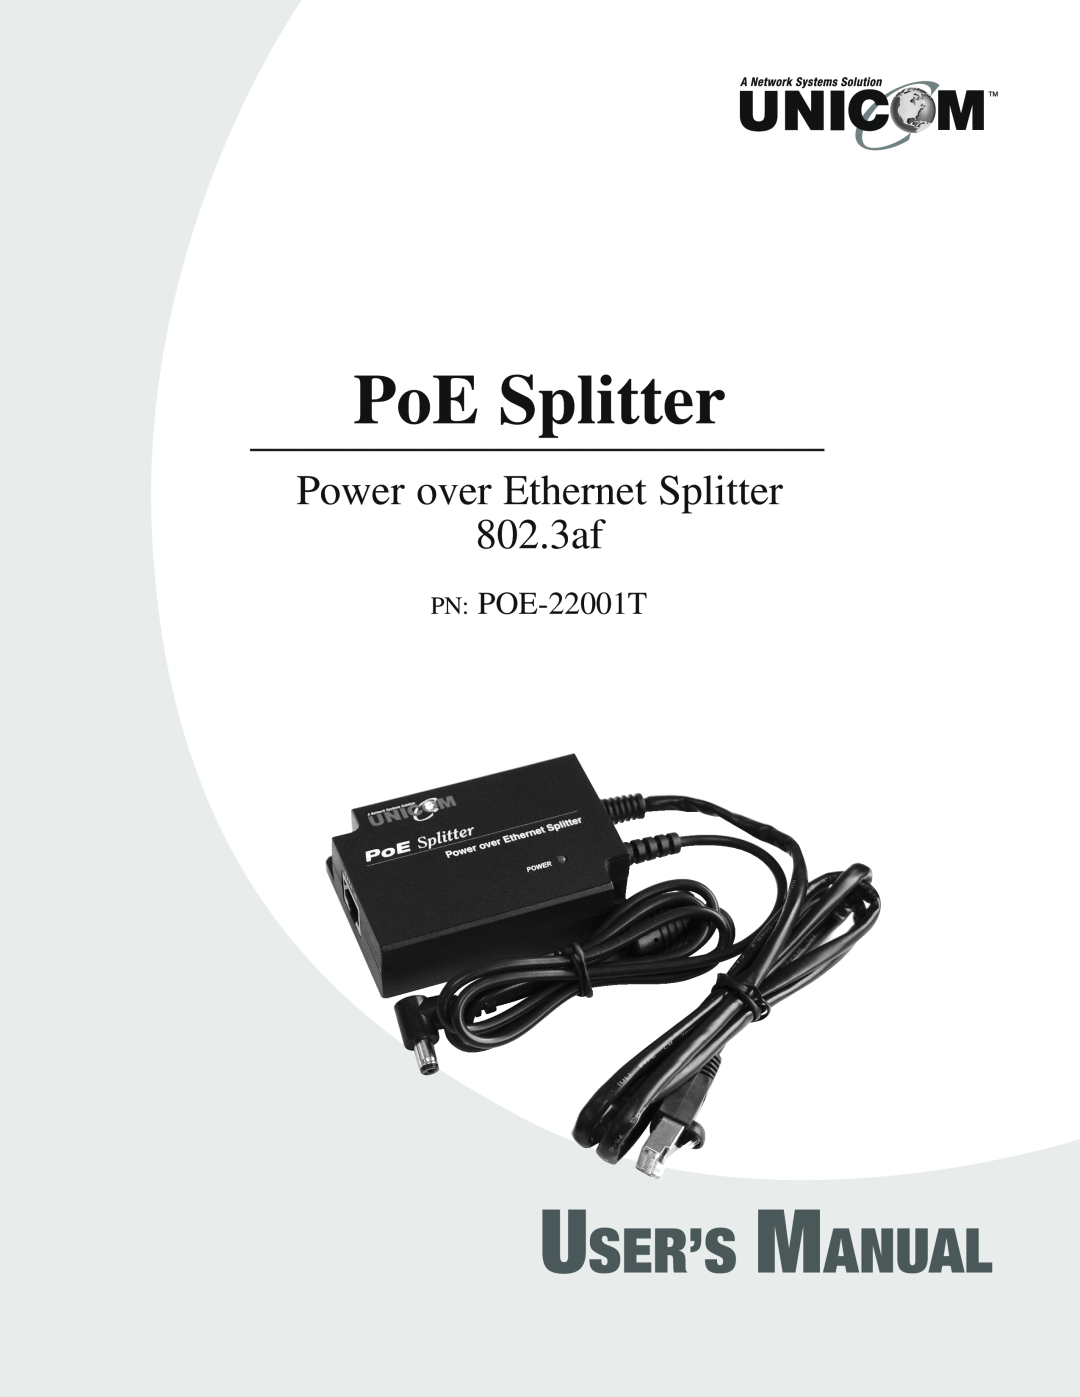 UNICOM Electric user manual PoE Splitter, User’S Manual, Power over Ethernet Splitter 802.3af, PN POE-22001T 